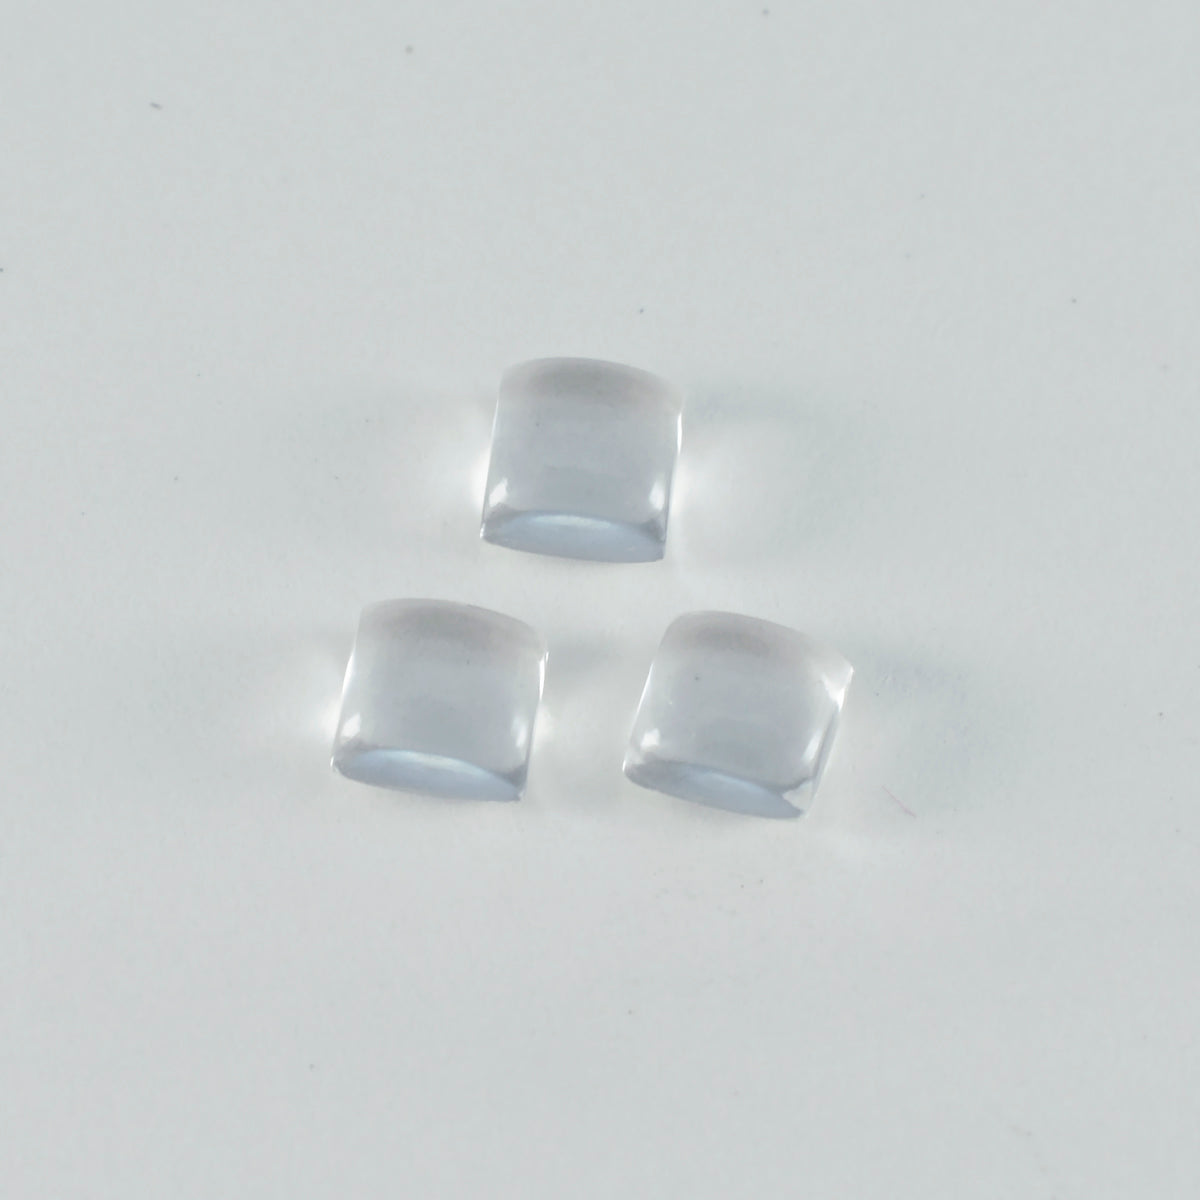 riyogems 1pc ホワイト クリスタル クォーツ カボション 8x8 mm 正方形の形状の驚くべき品質のルース宝石